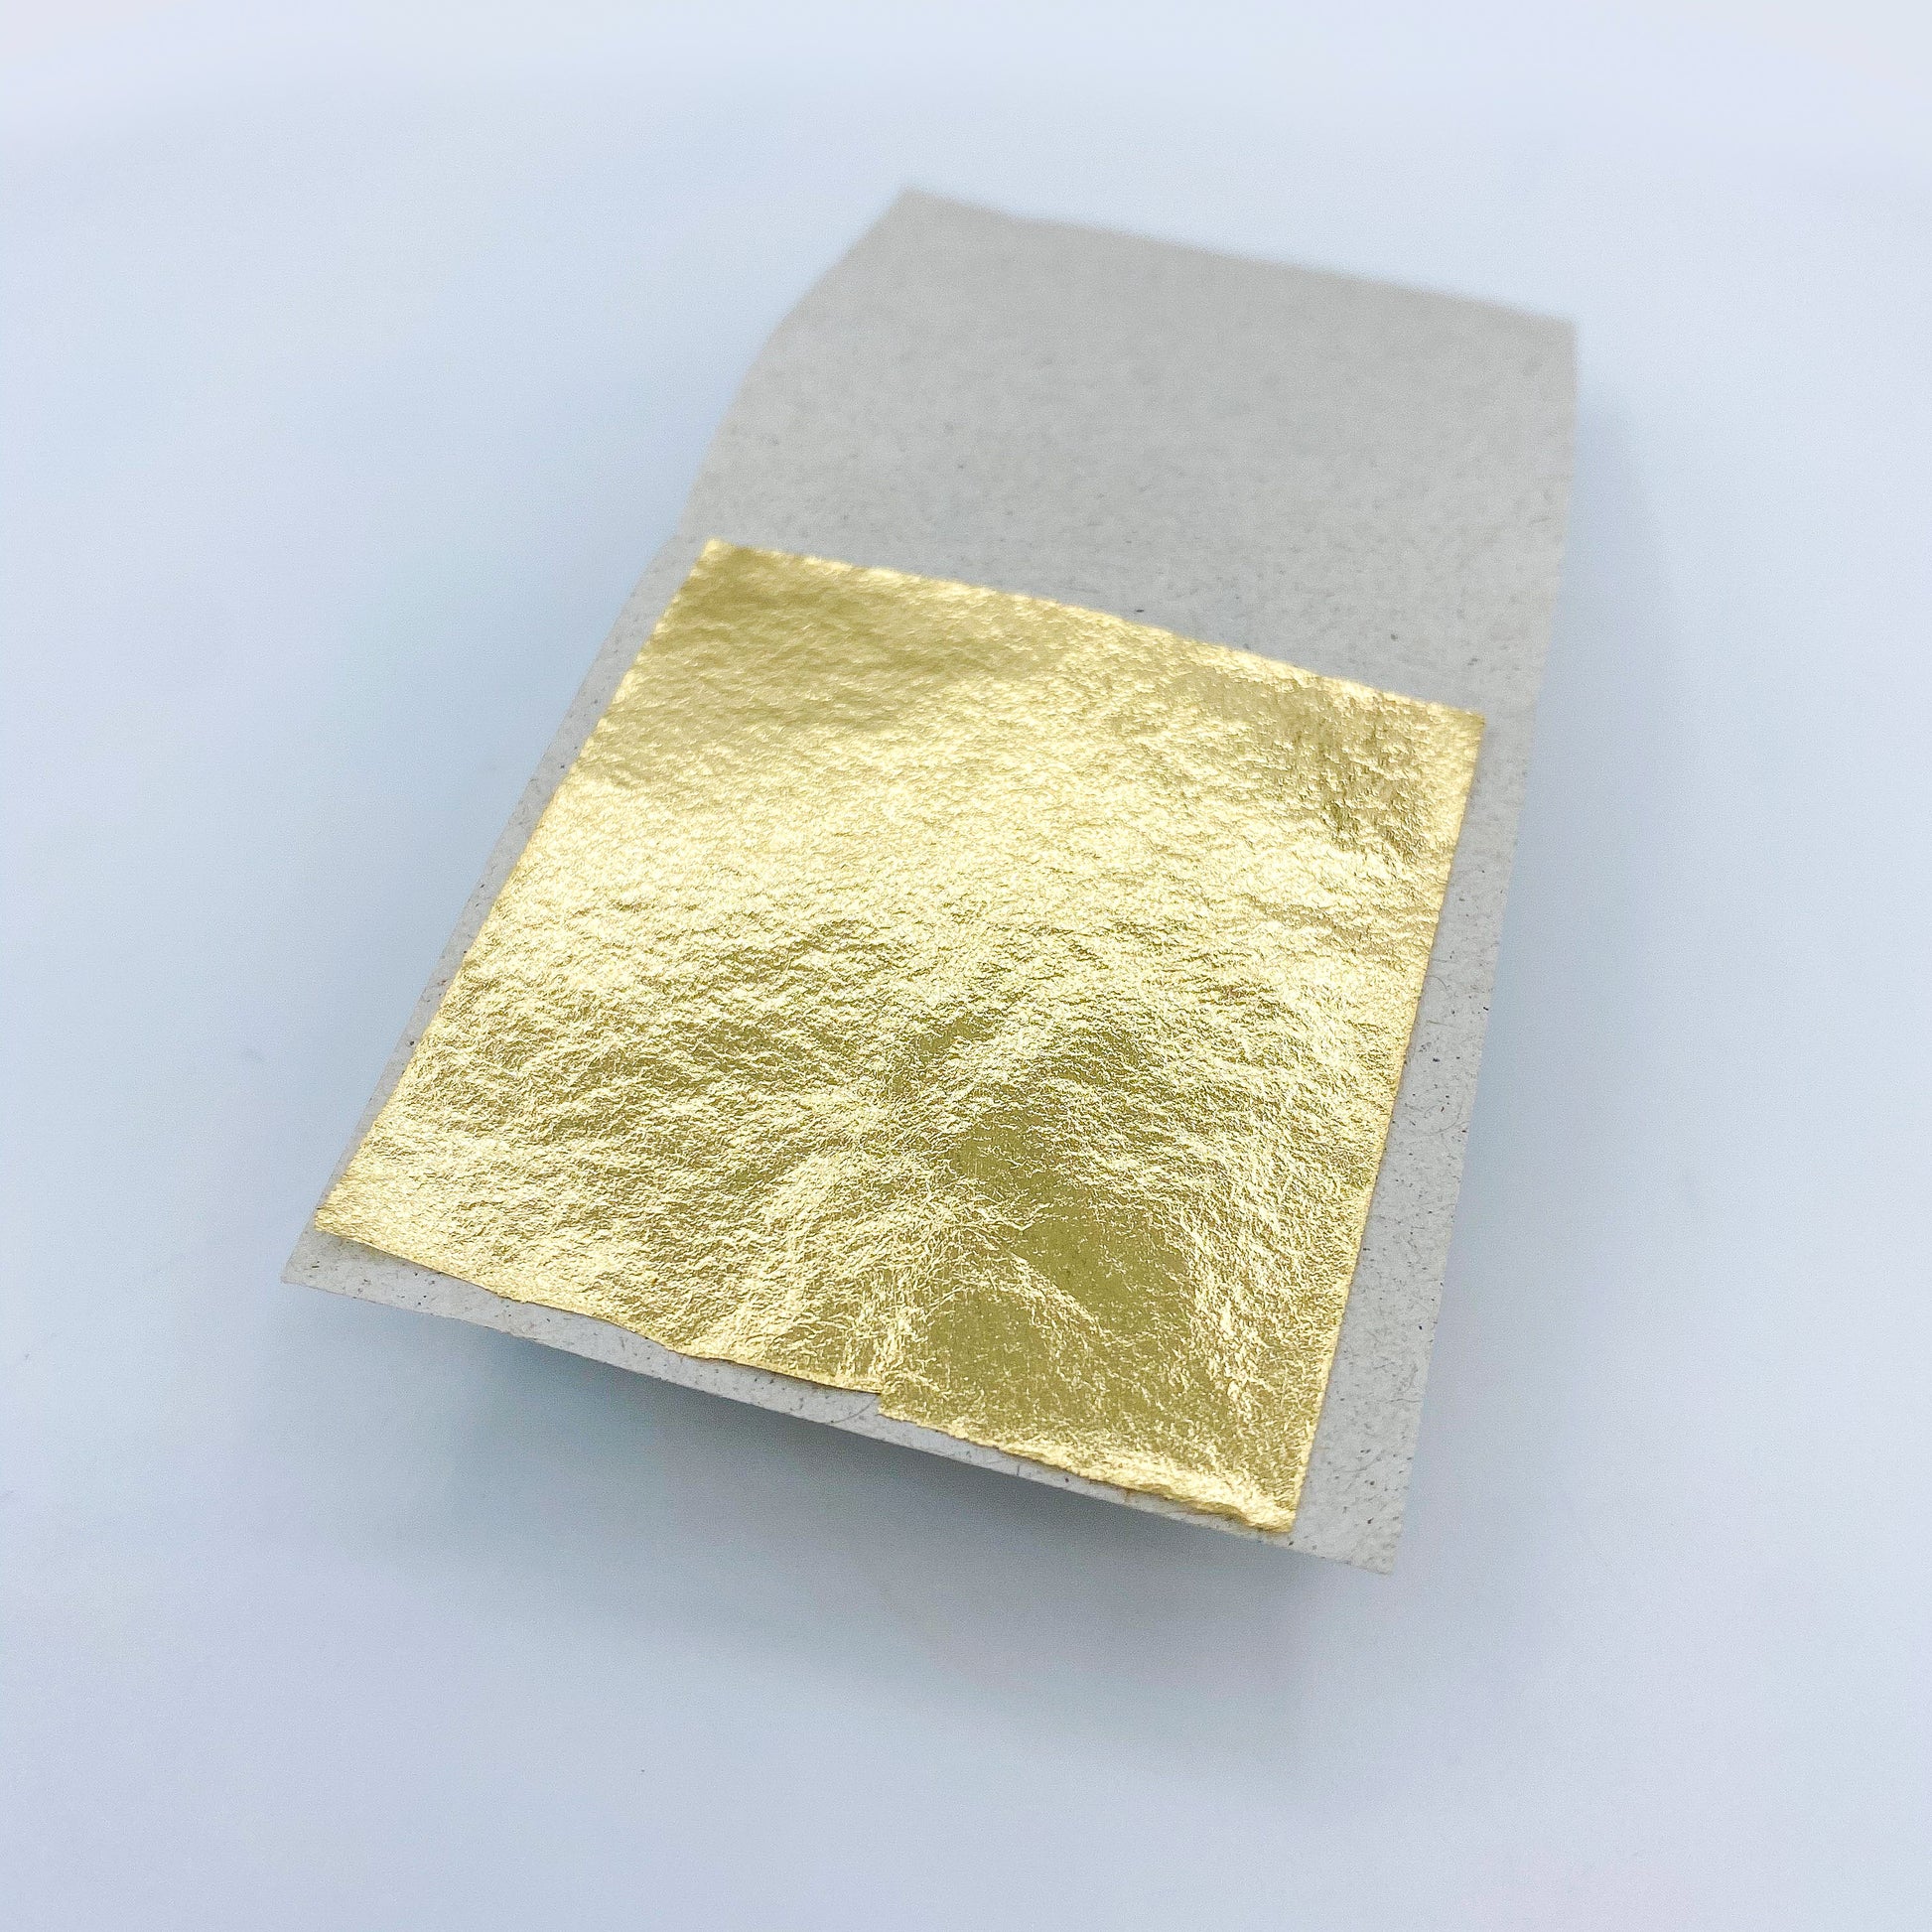 1PCS Genuine Gold Leaf Schabin Flakes 2g 24K Gold Decorative